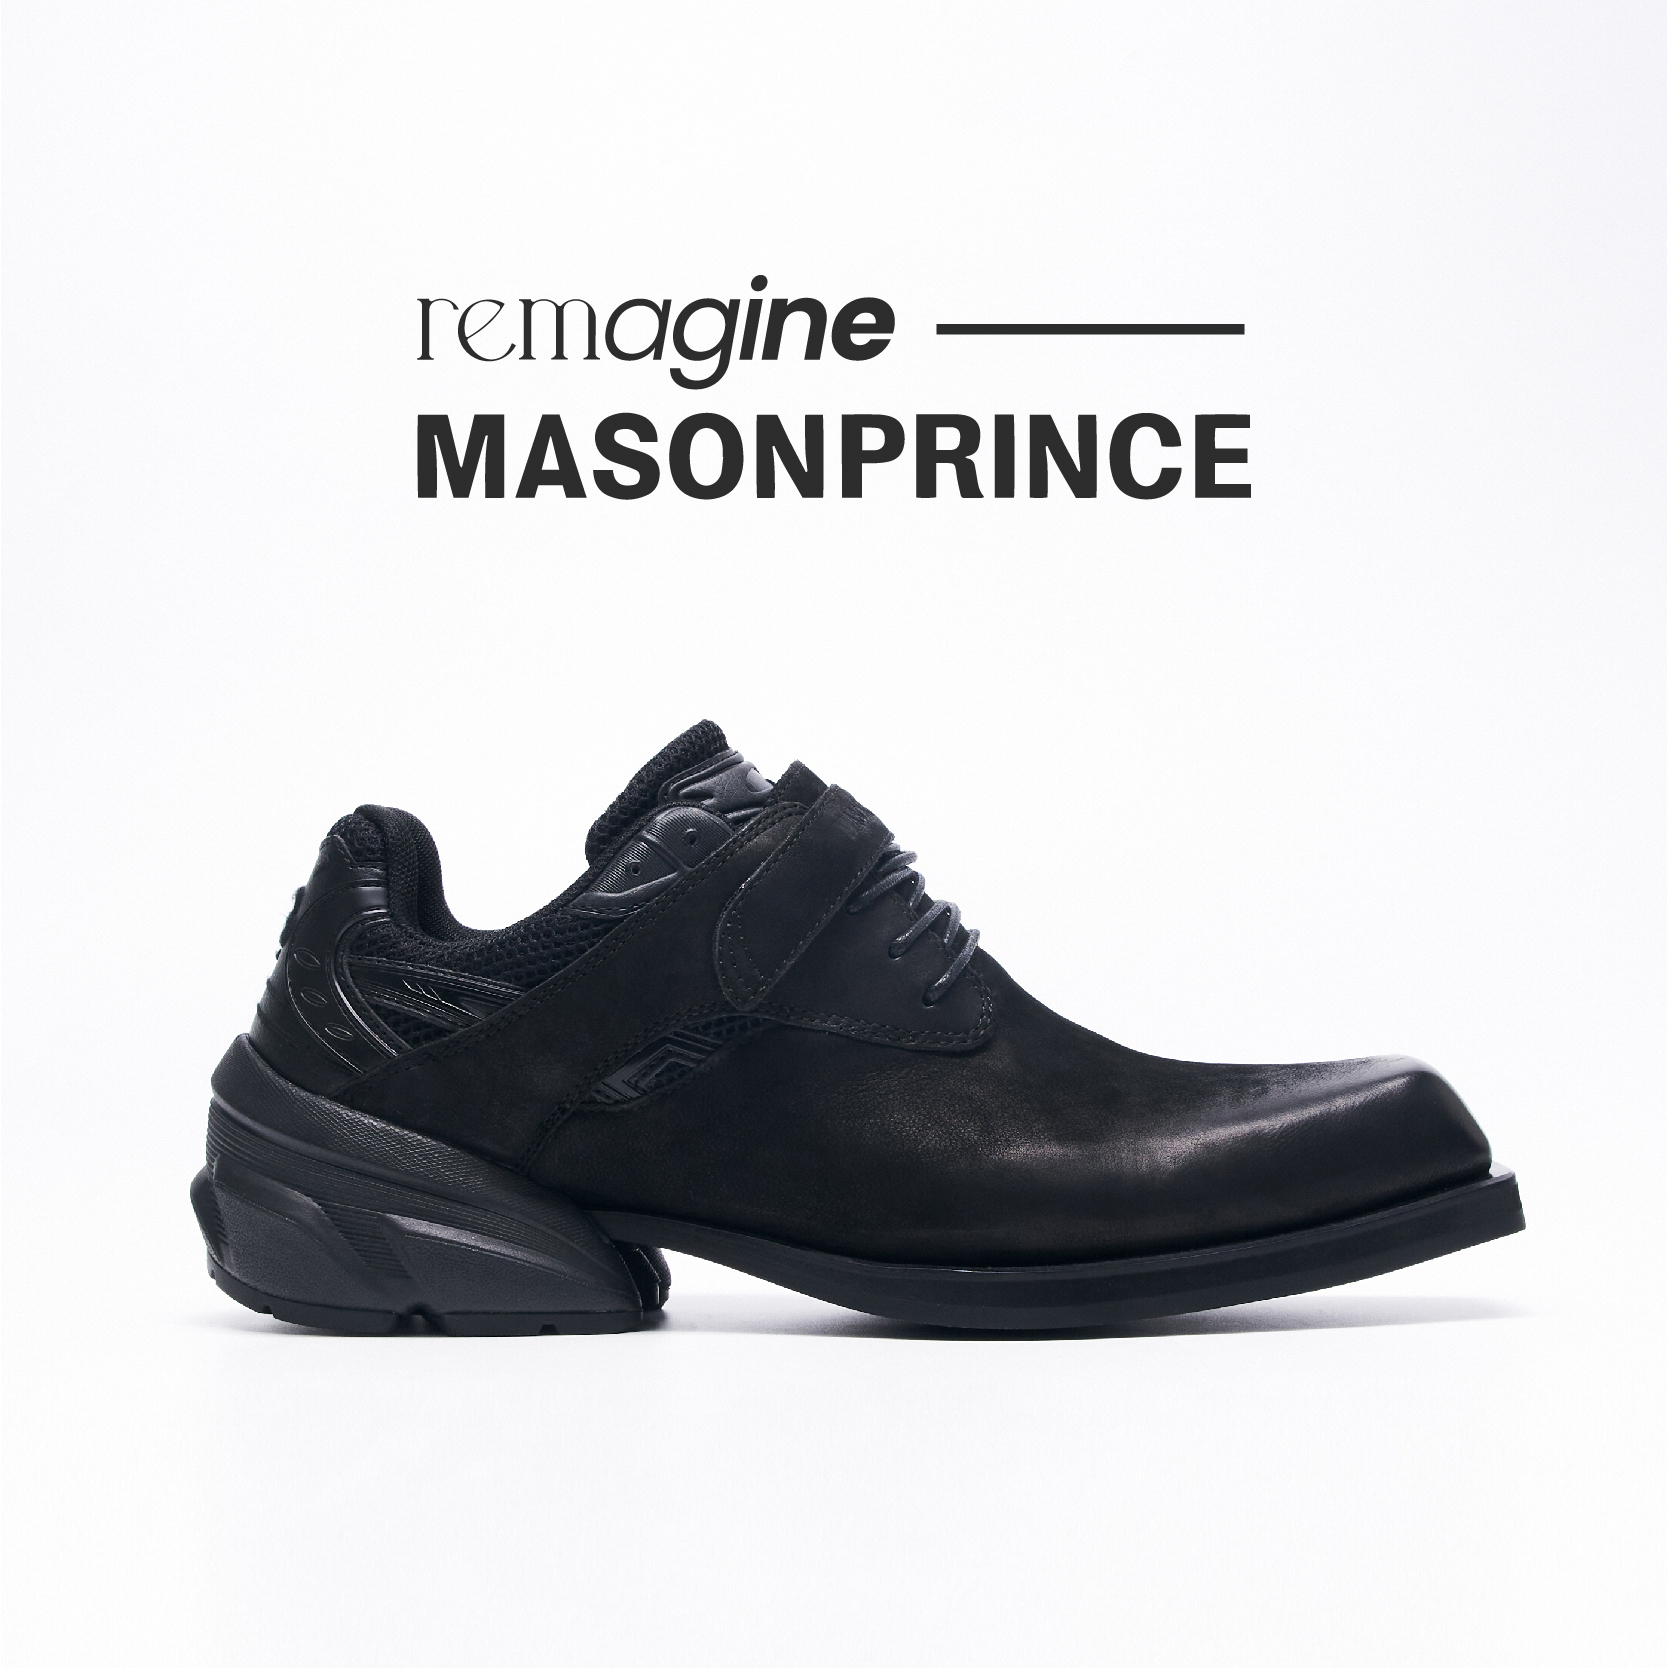 Remagine & Mason Prince - hybrid derby shoes “starting blocks”